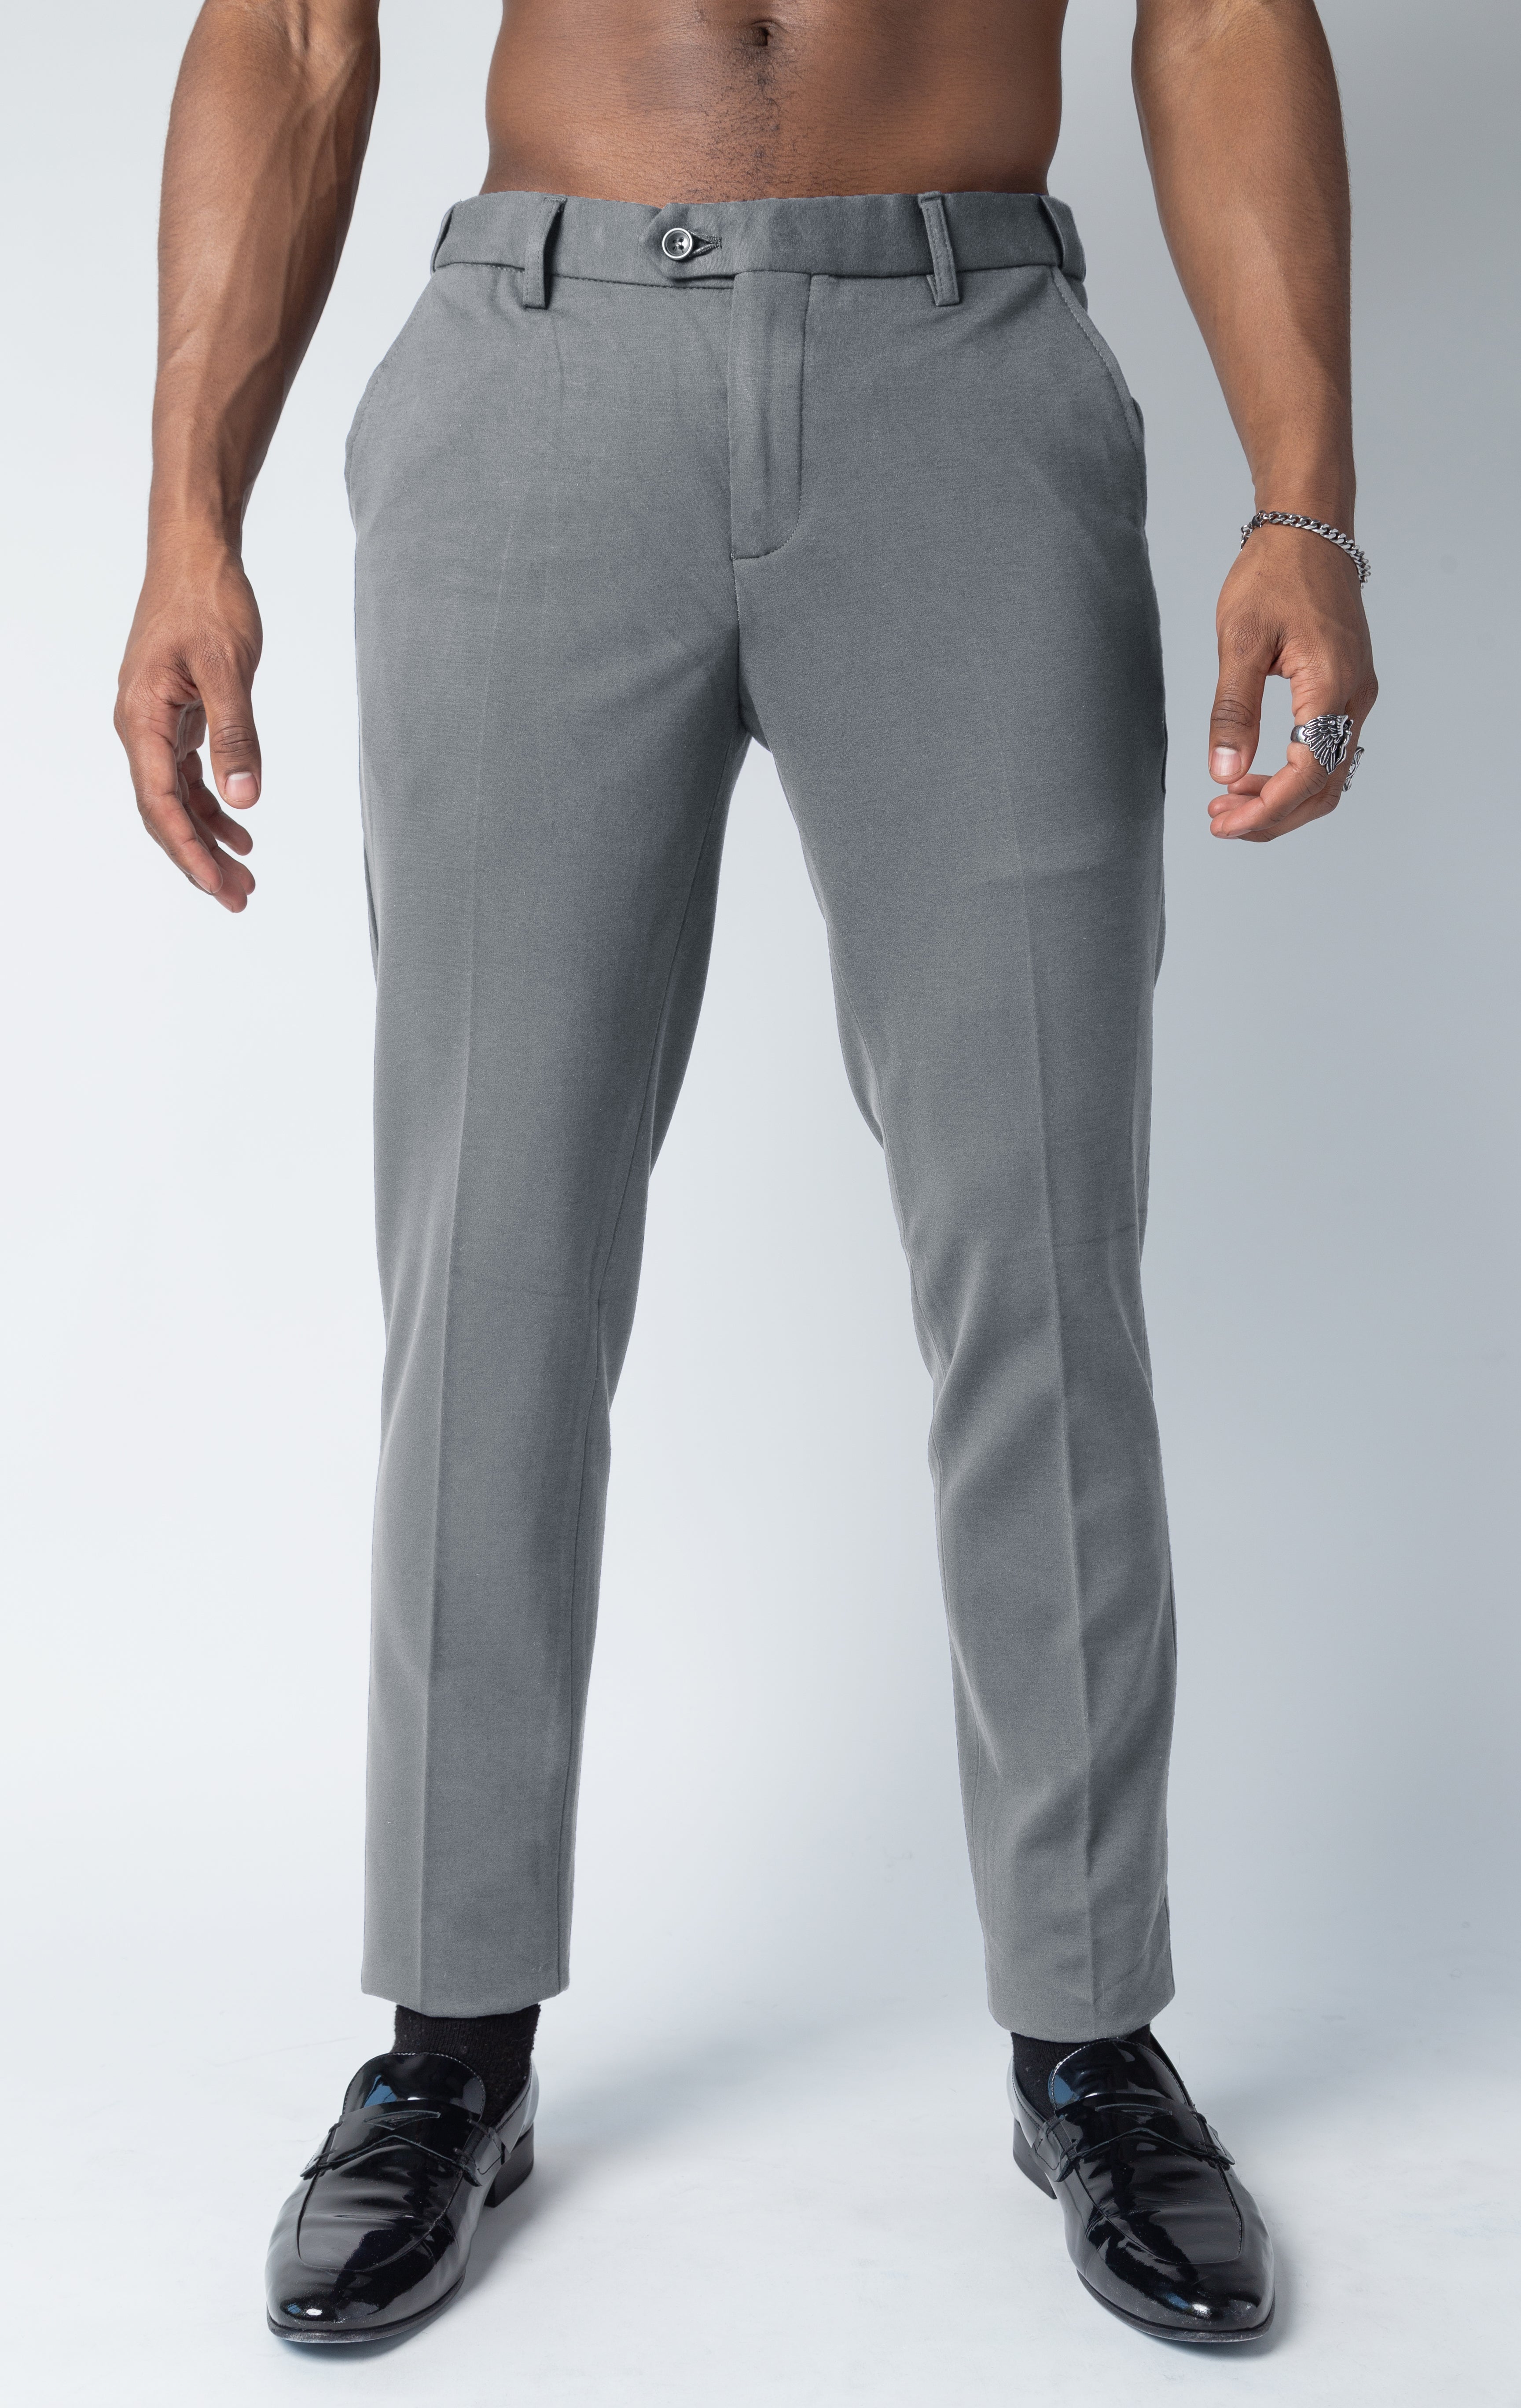 Gray dress pants with elastic waistband technology